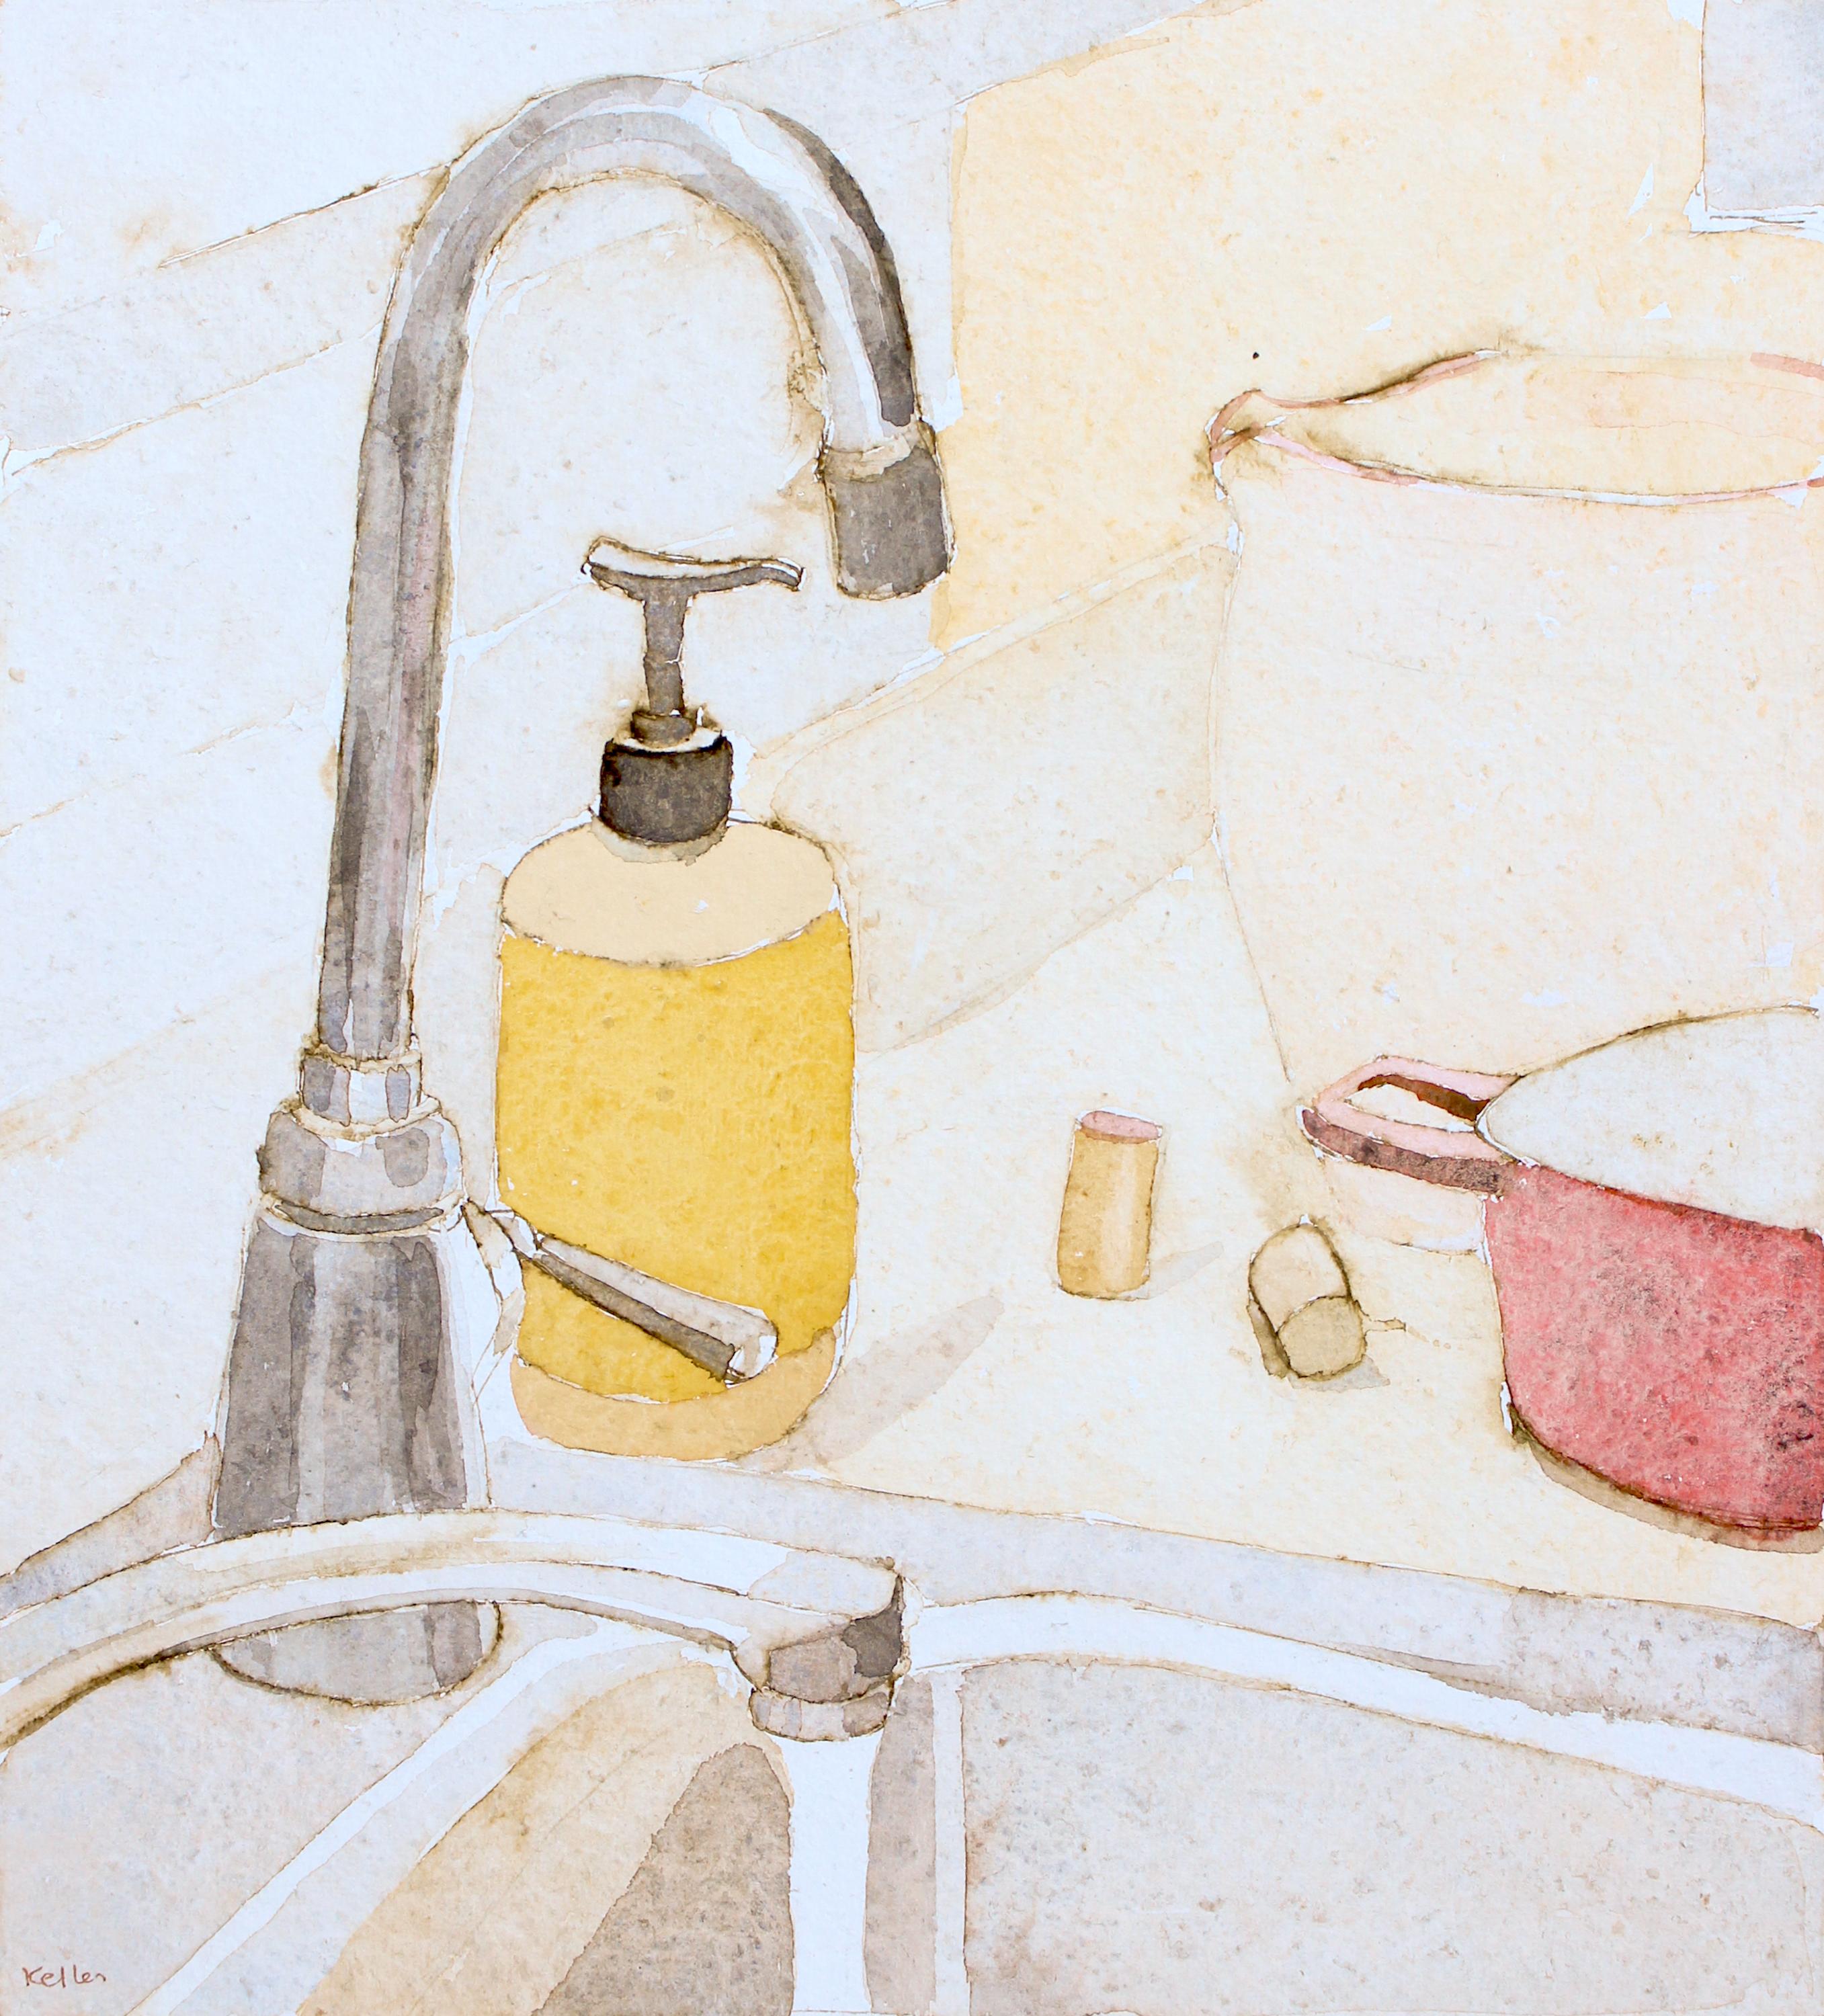 Interior Art Kathryn Keller - « Meyer's Lemon Soap » - aquarelle de nature morte - objets ordinaires - George Inness